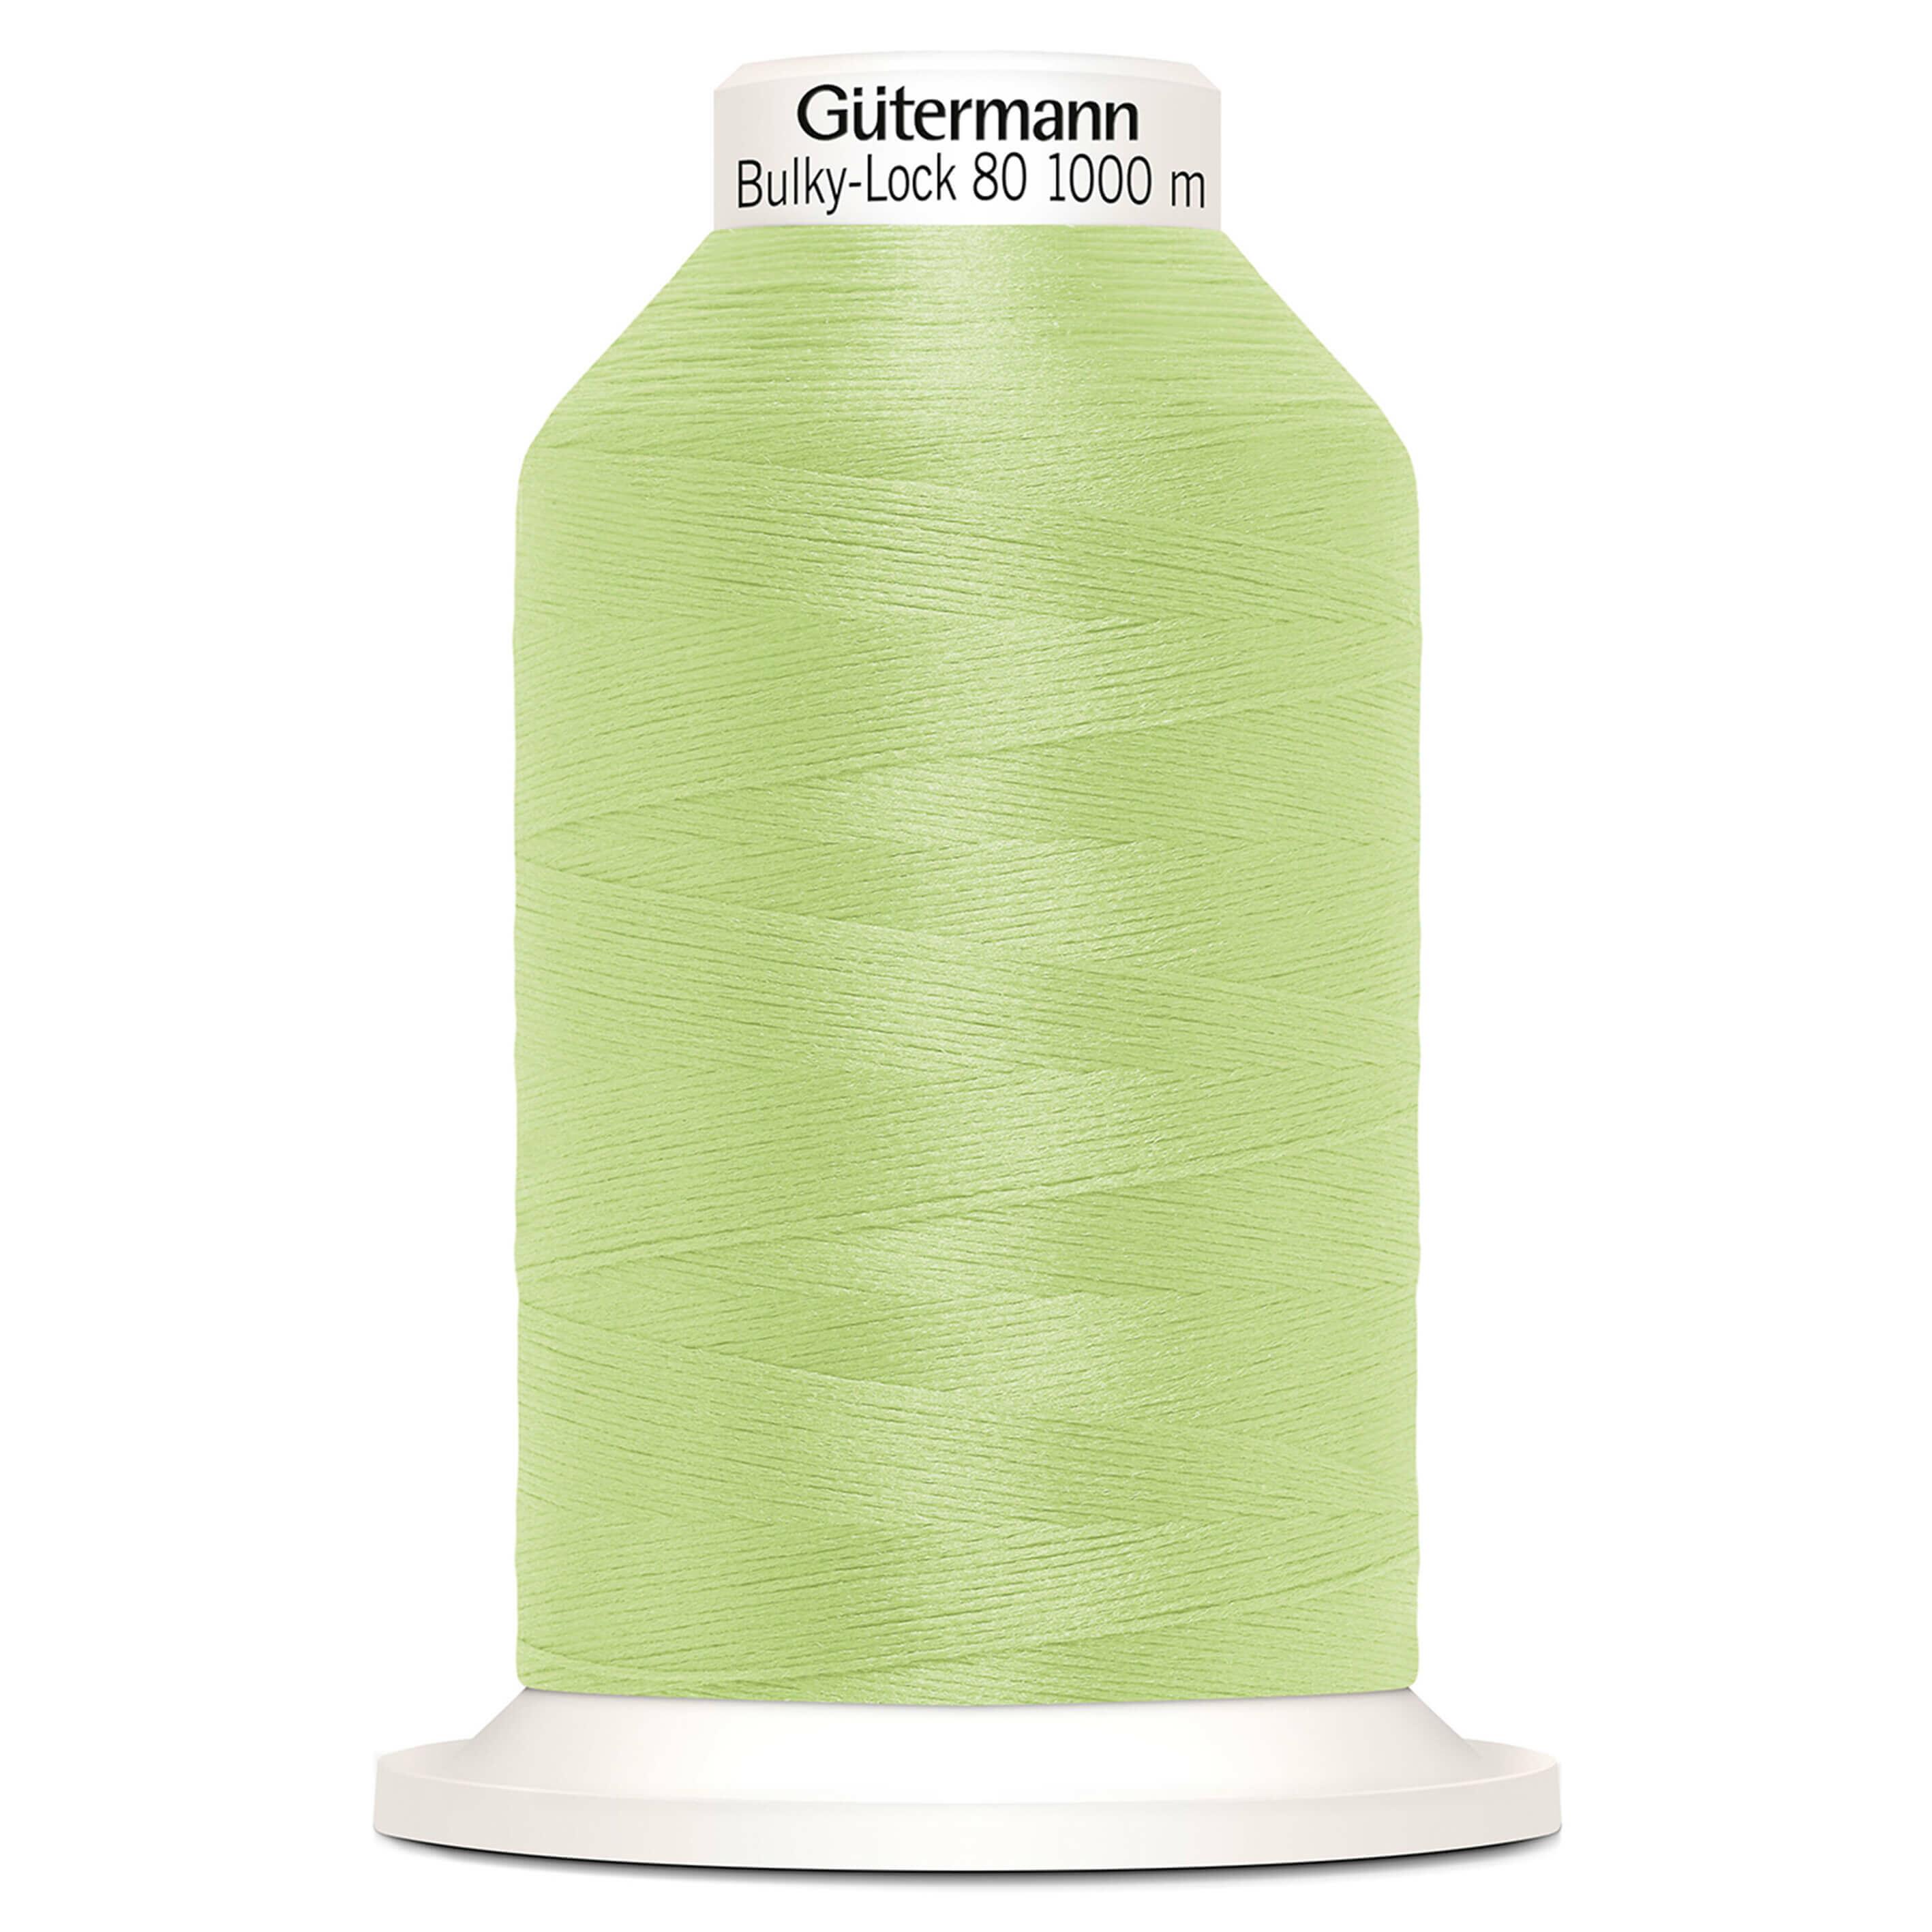 Gutermann Bulky Lock 80 overlocking thread in colour 152 Soft Green